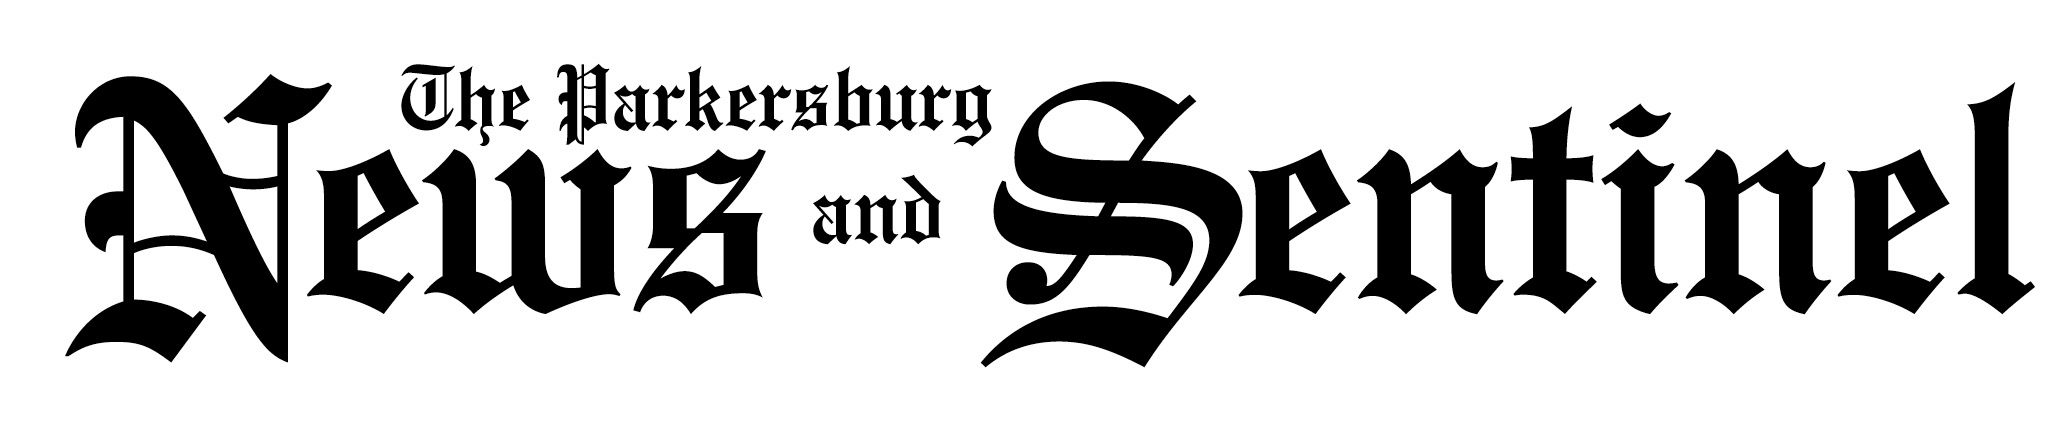 Newspapers Logos